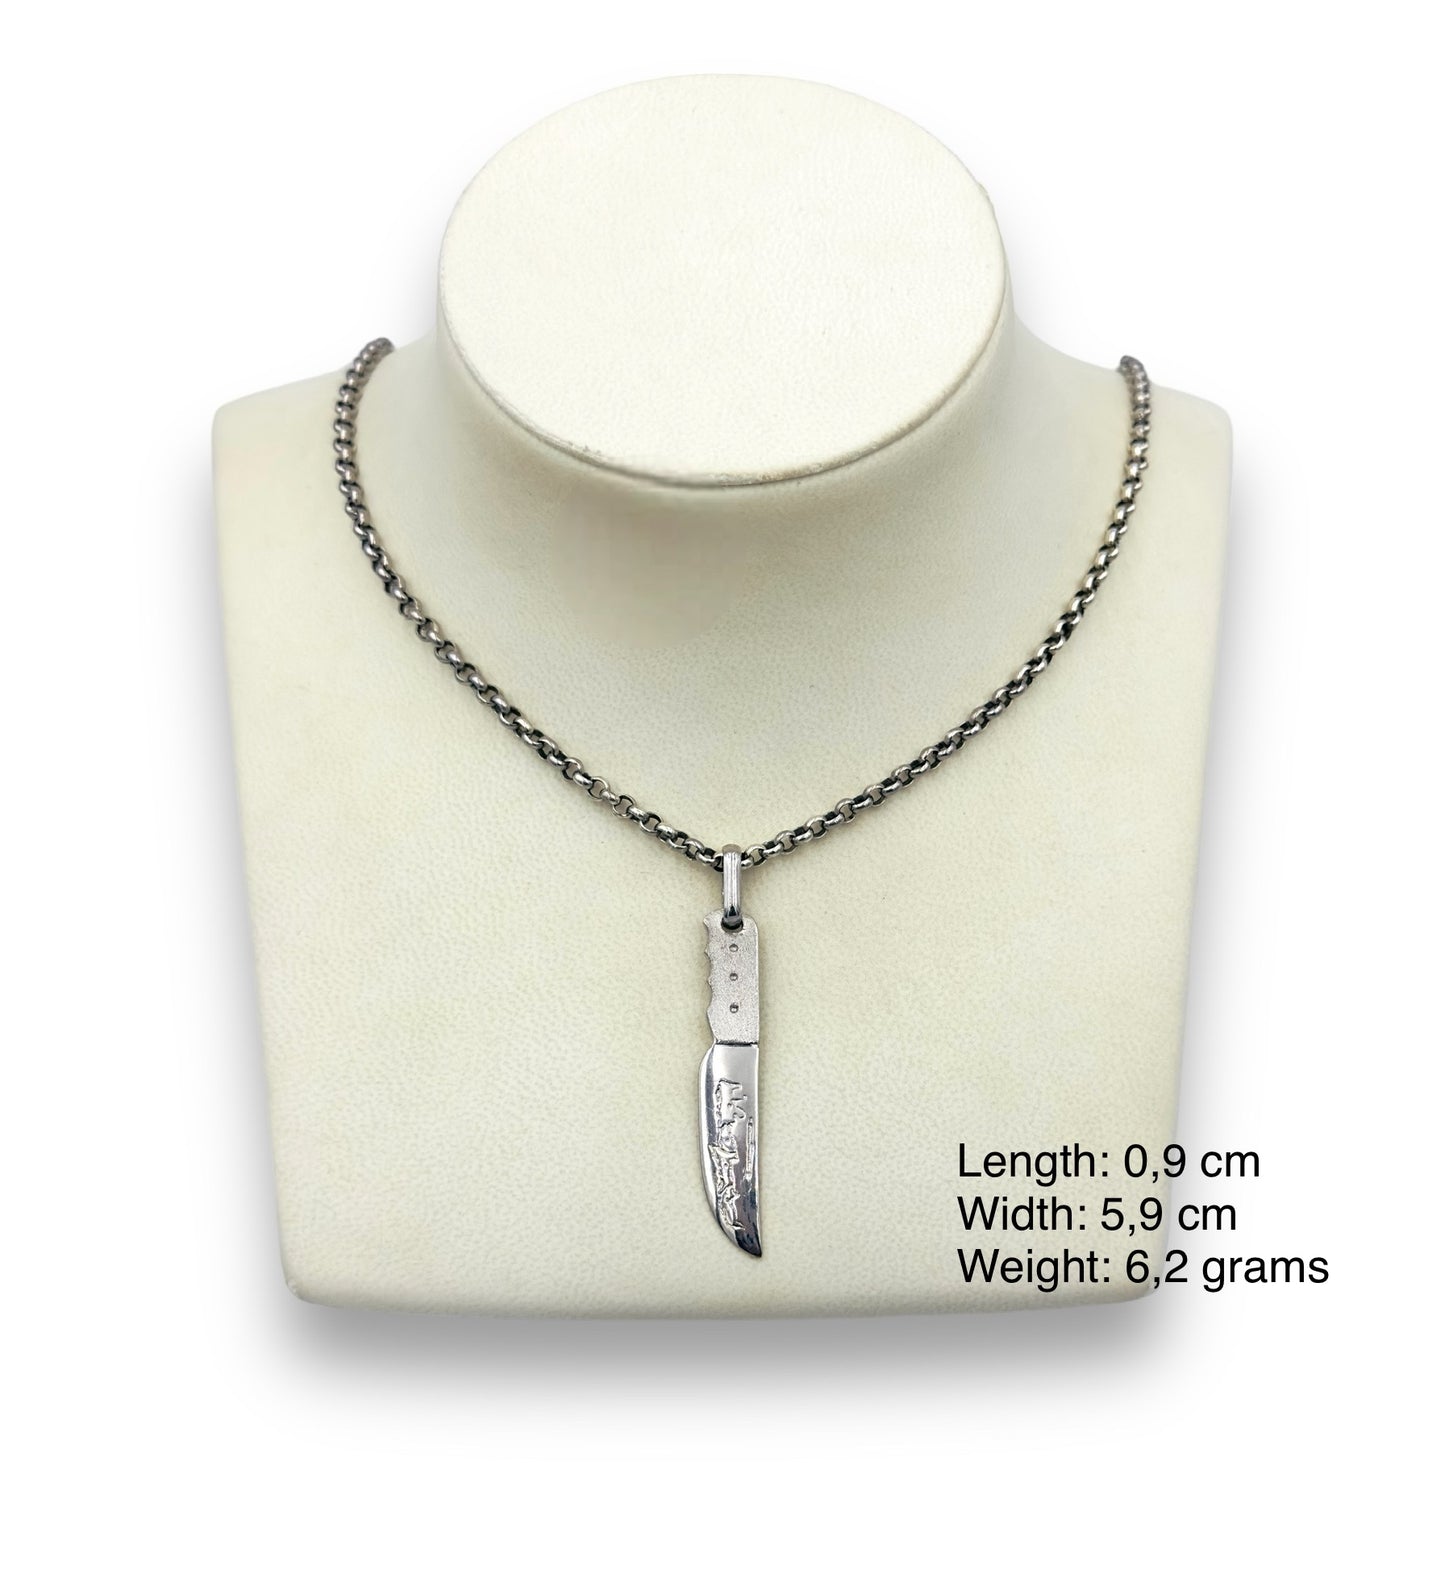 Silver Cretan knife with Crete island engraving pendant